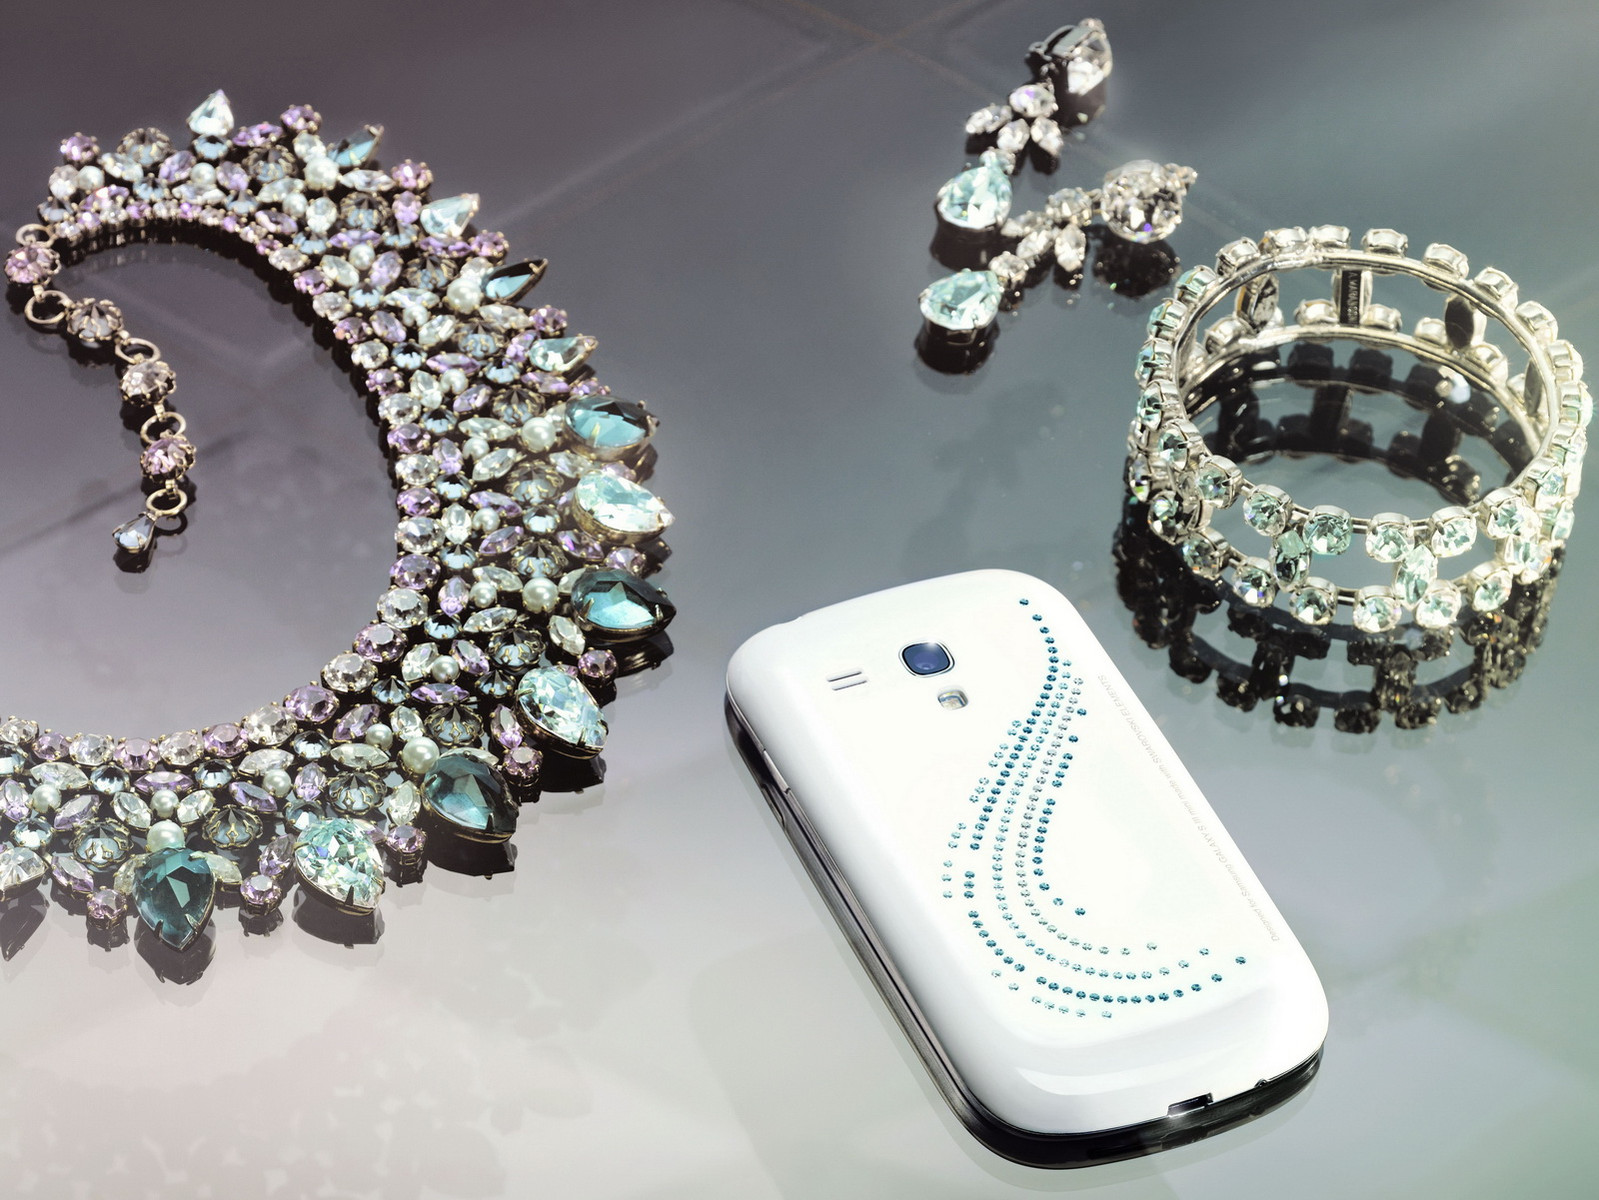 Samsung dezvăluie Galaxy S III mini Crystal Edition